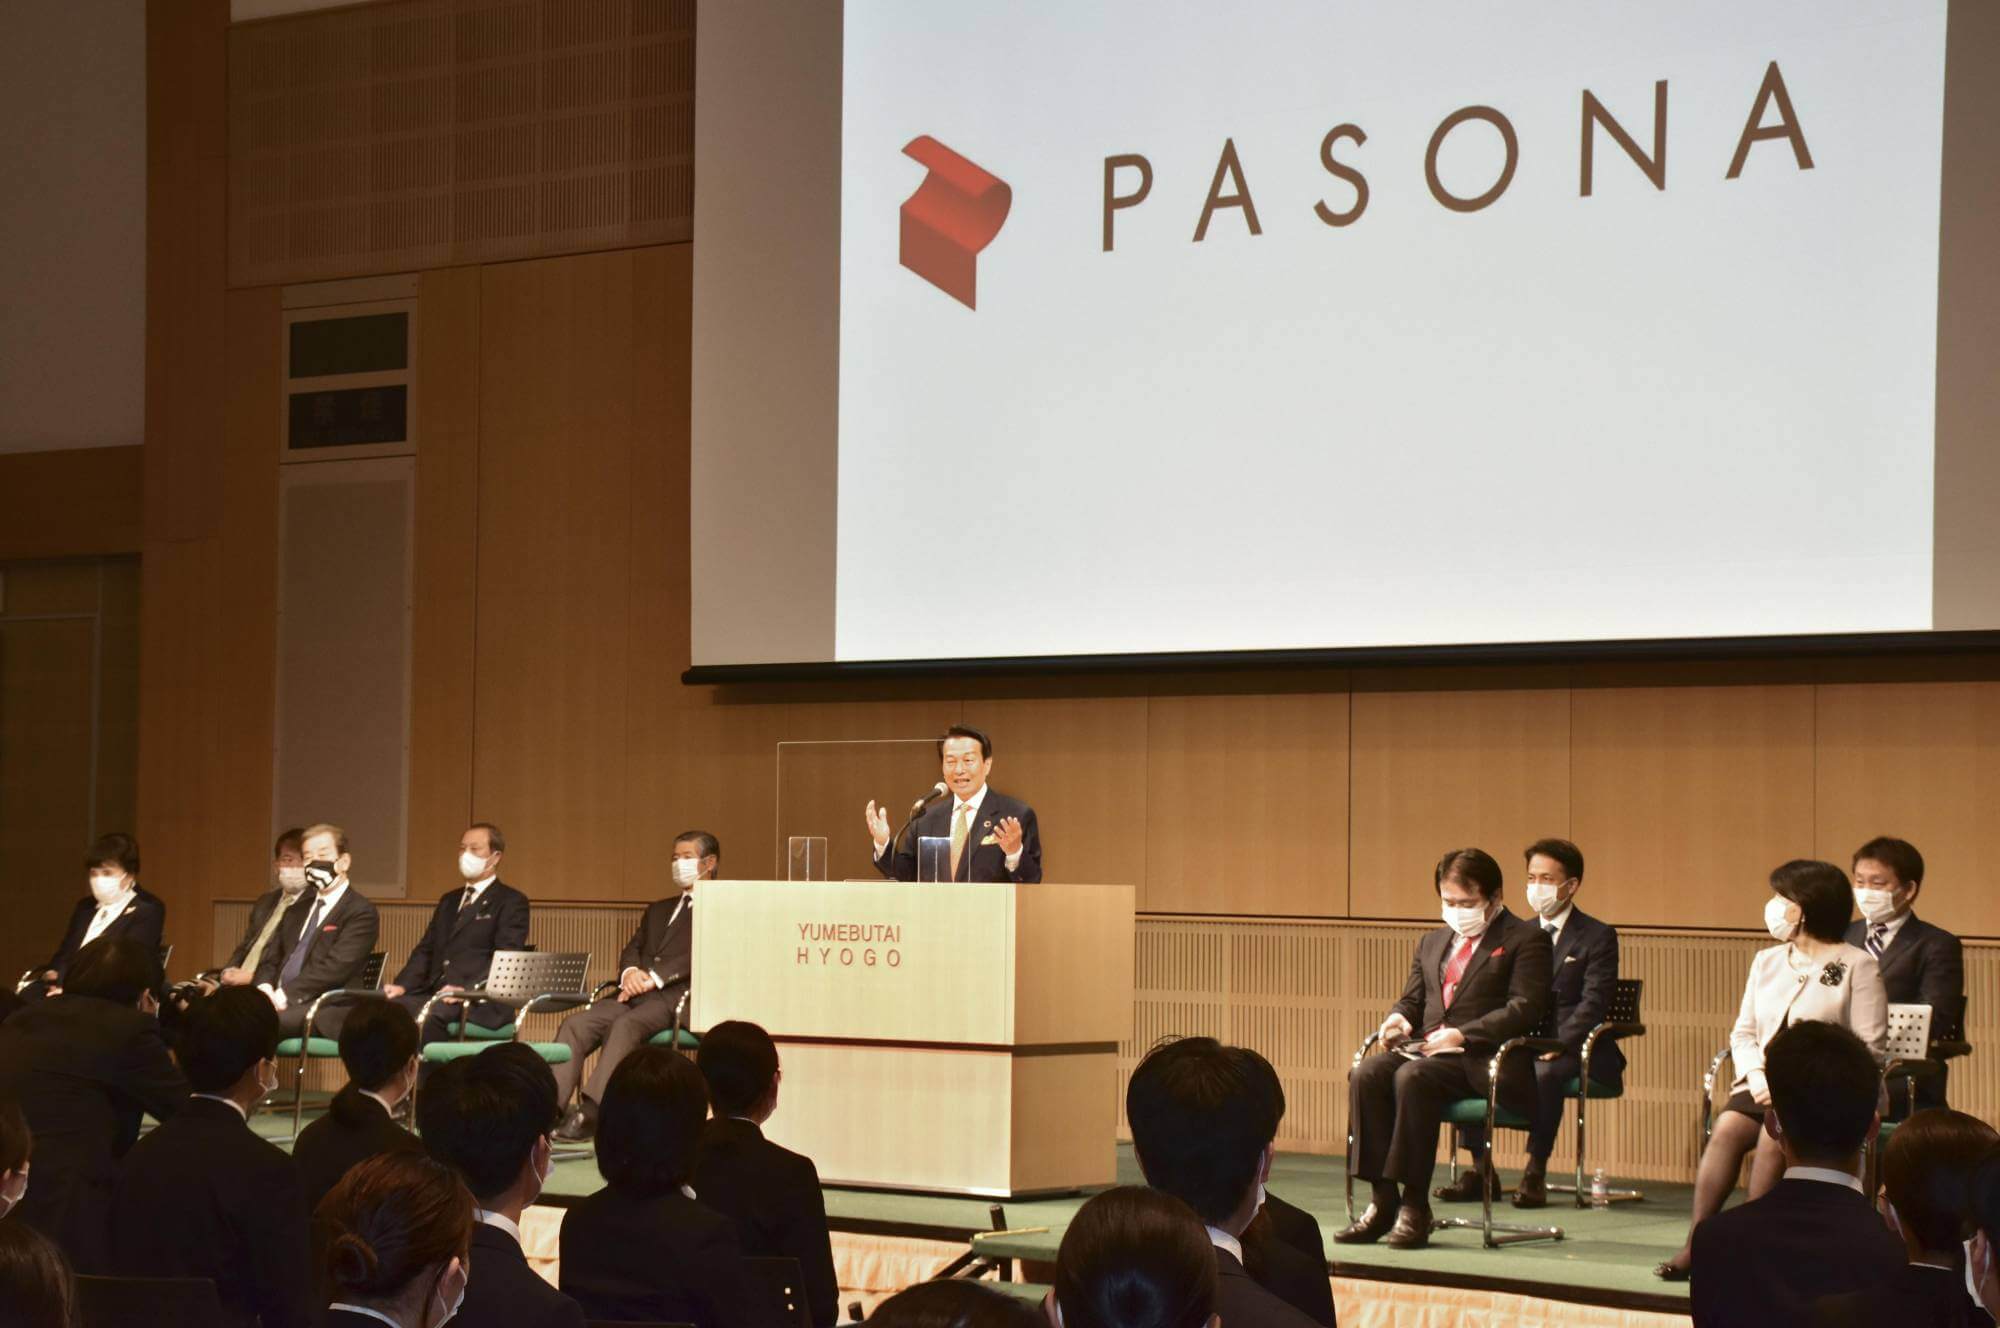 BPO expansion of Japan-based Pasona Group revises its forecasted earnings